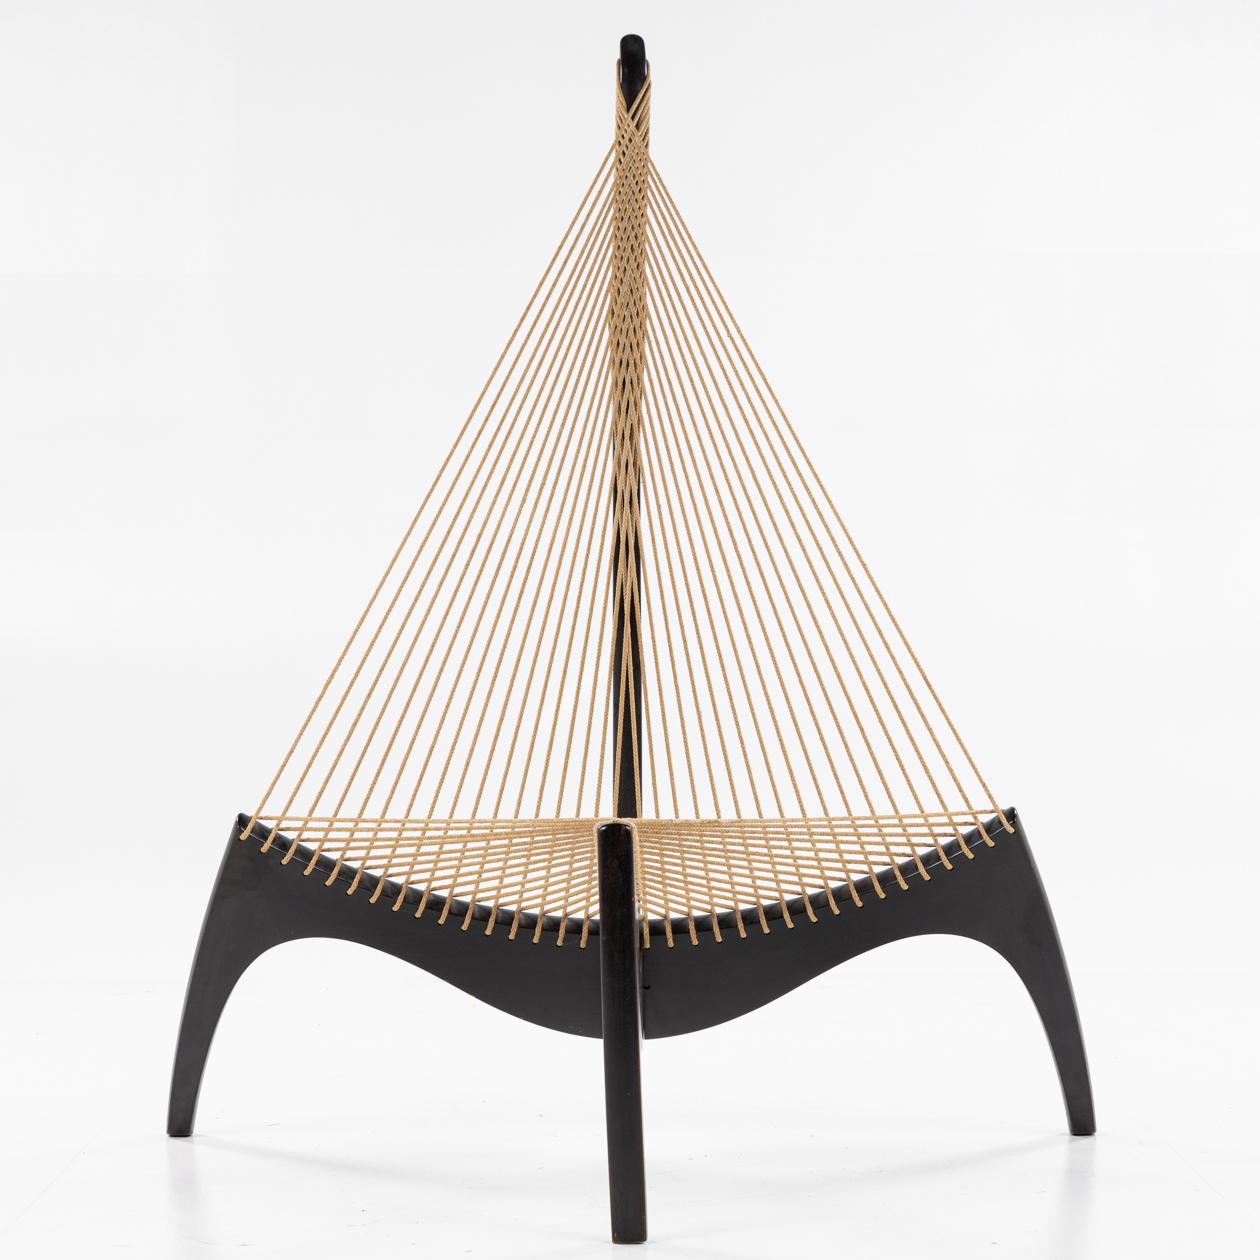 Mahogany Harp chair by Jørgen Høvelskov